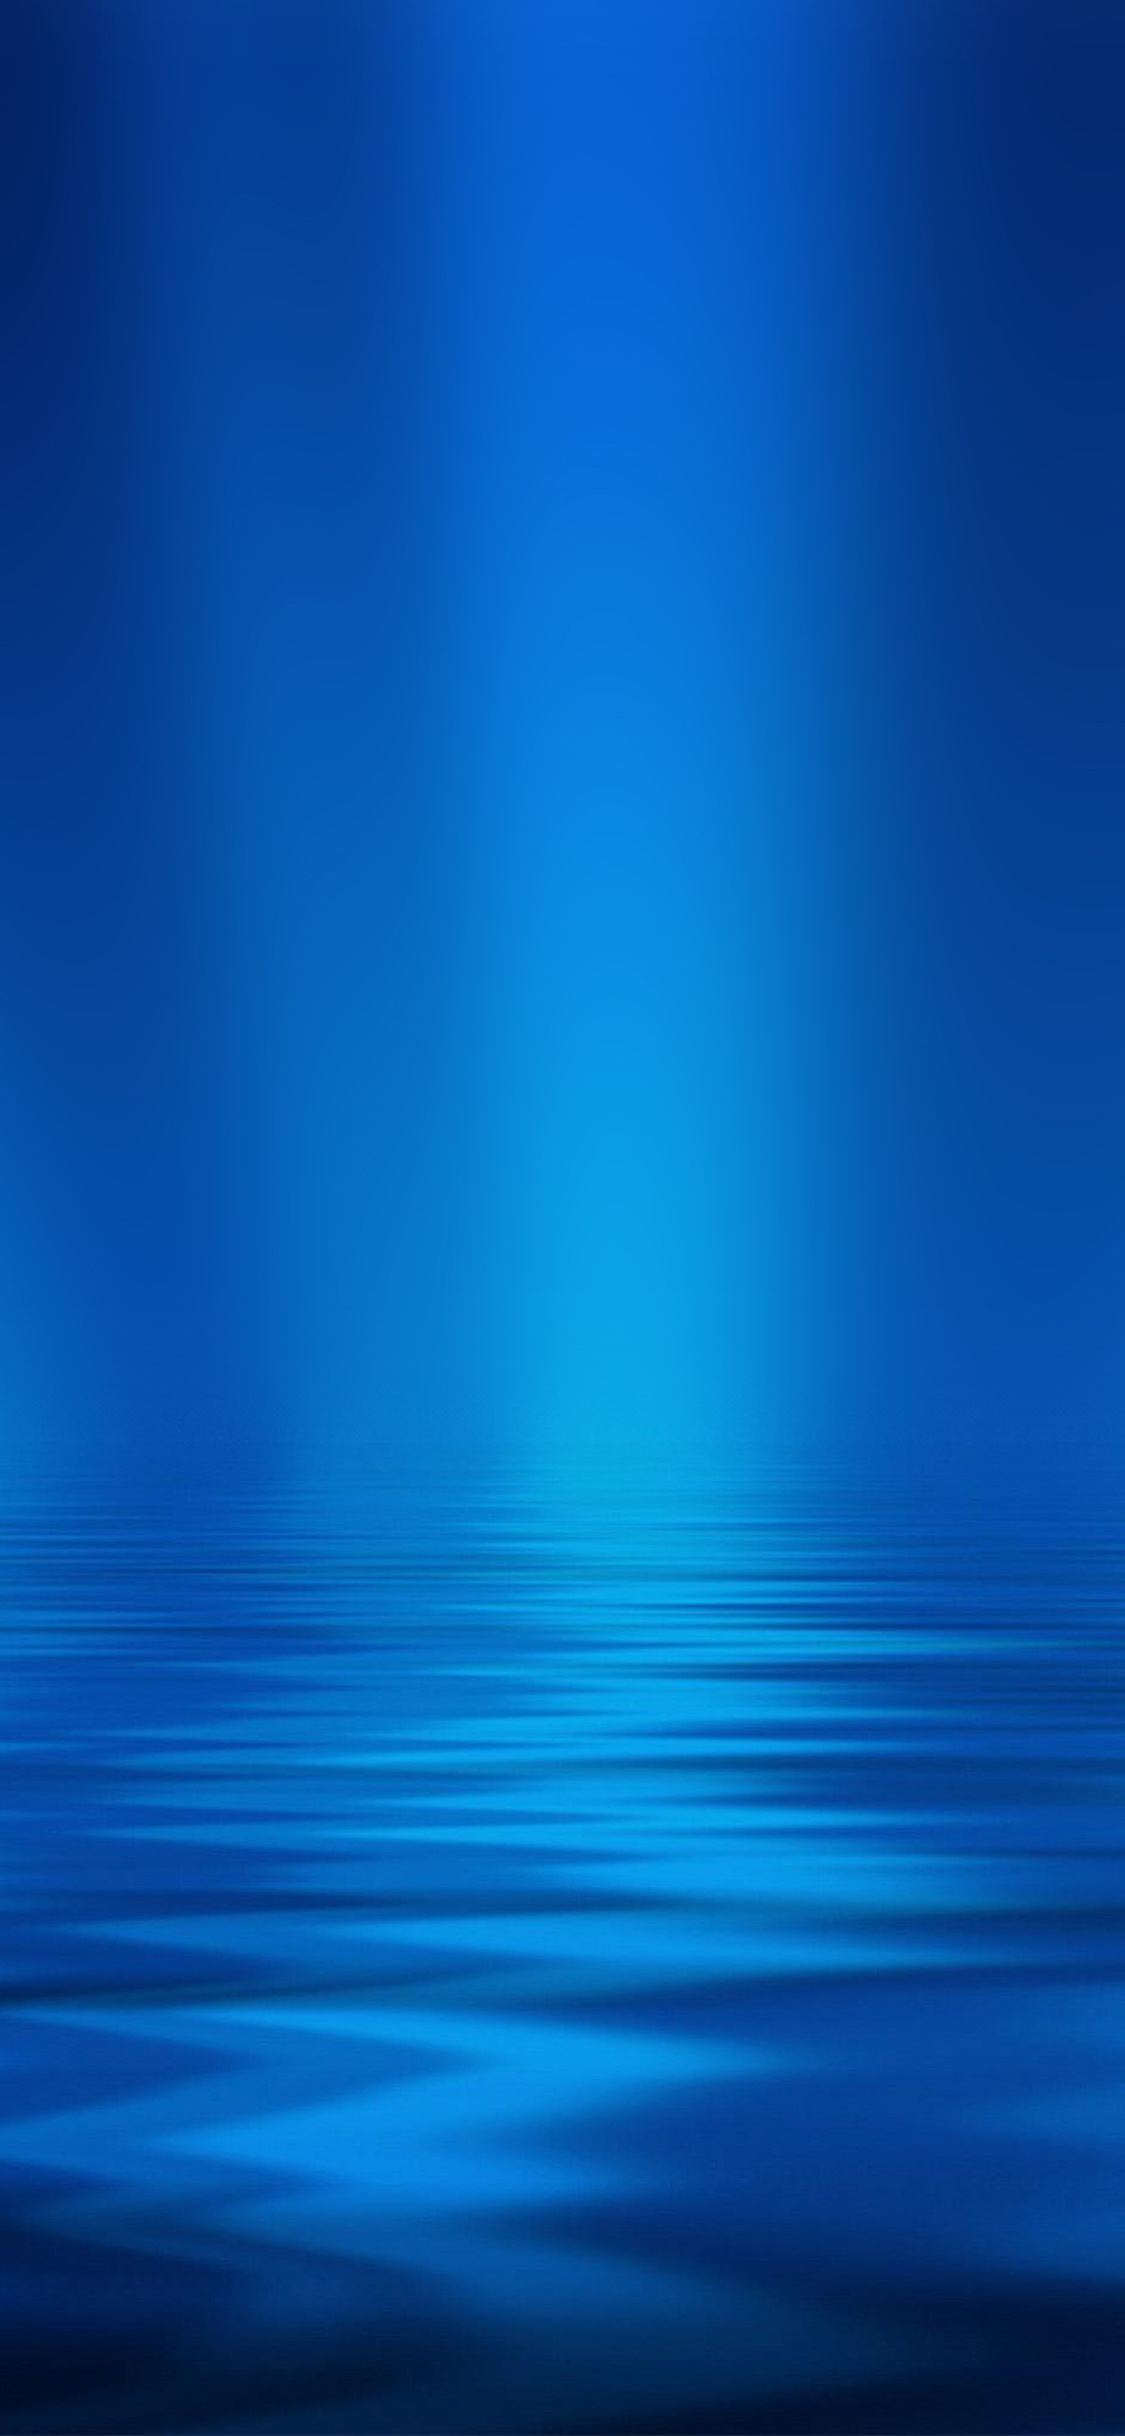 iPhone X wallpaper. sea blue ripple pattern